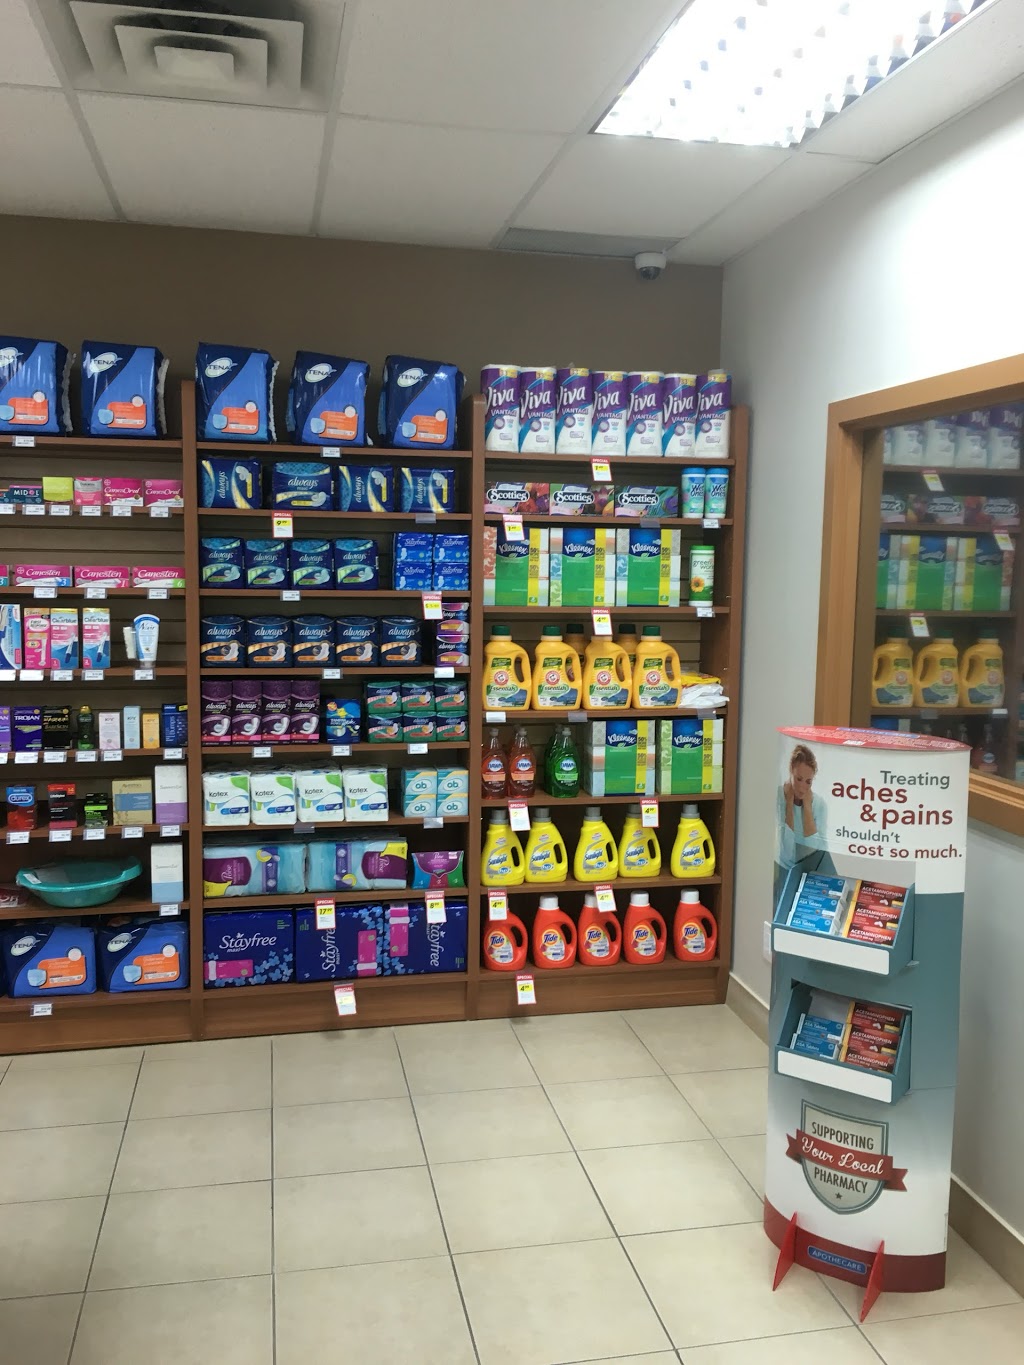 Eramosa Pharmacy | 247 Eramosa Rd, Guelph, ON N1E 2M5, Canada | Phone: (519) 265-5251